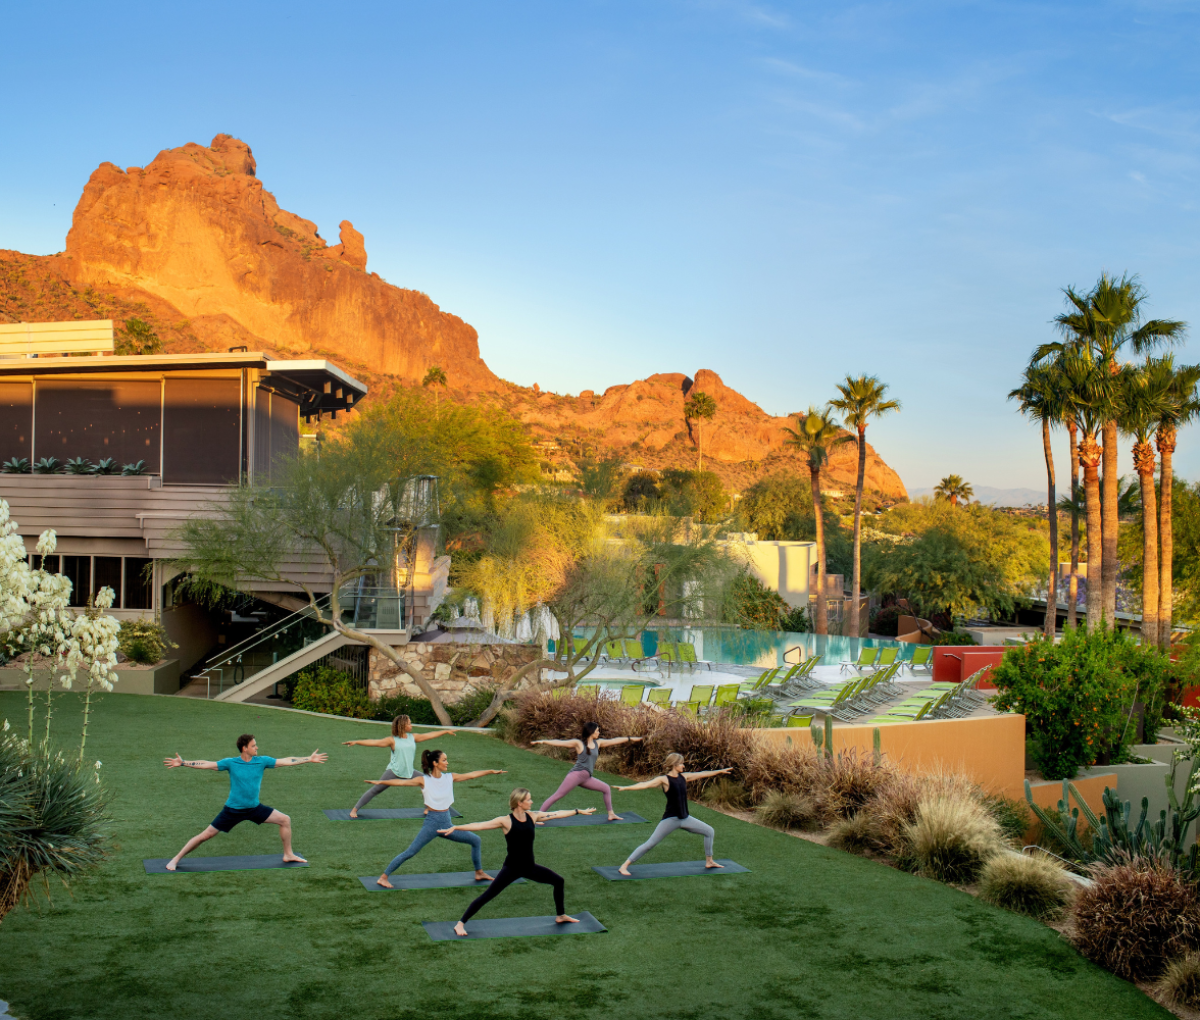 A yoga class at a resort in Scottsdale, Arizona